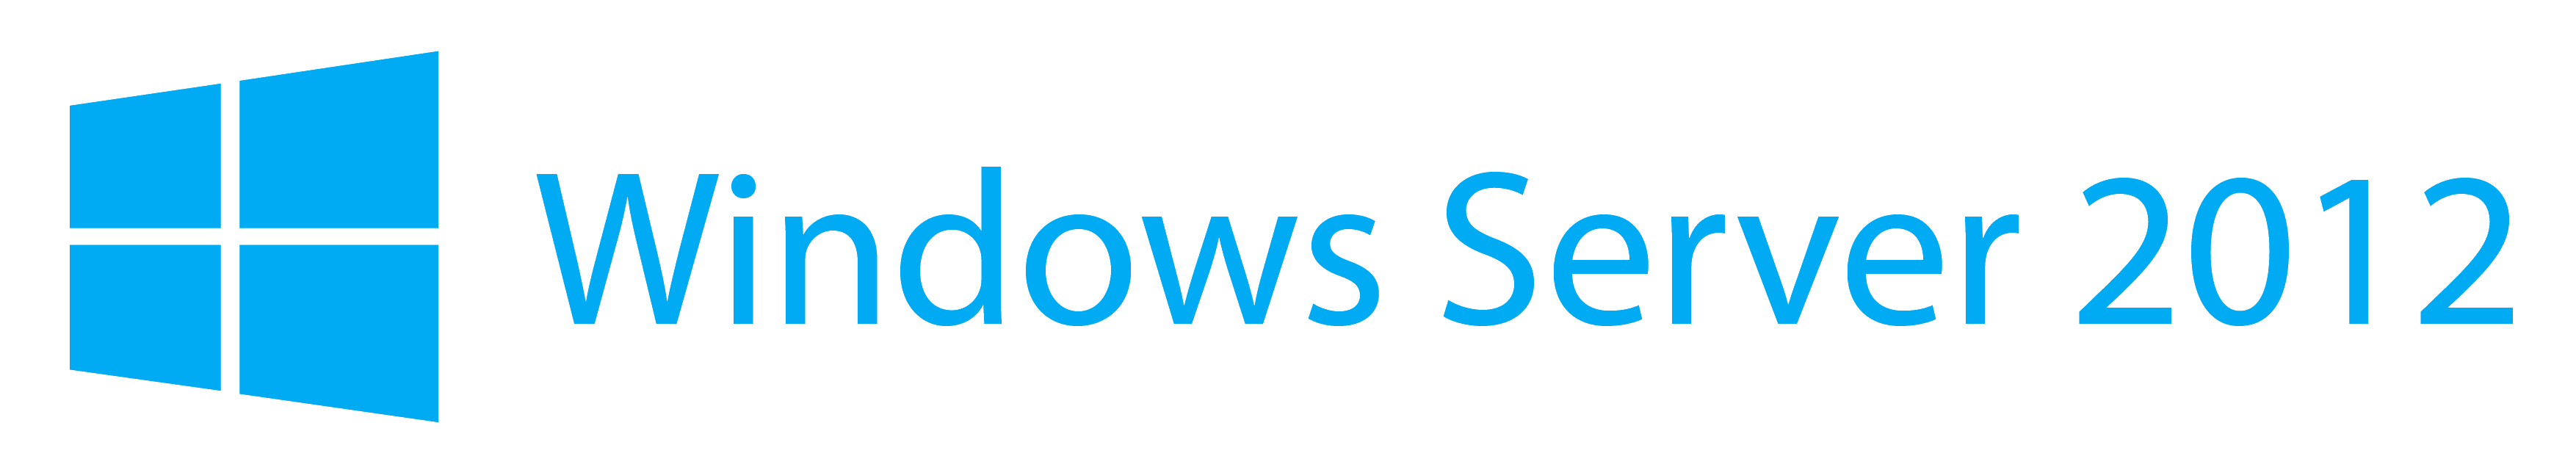 Windows 8 Server Logo - File:Windows server 2012-logo.png - Wikimedia Commons